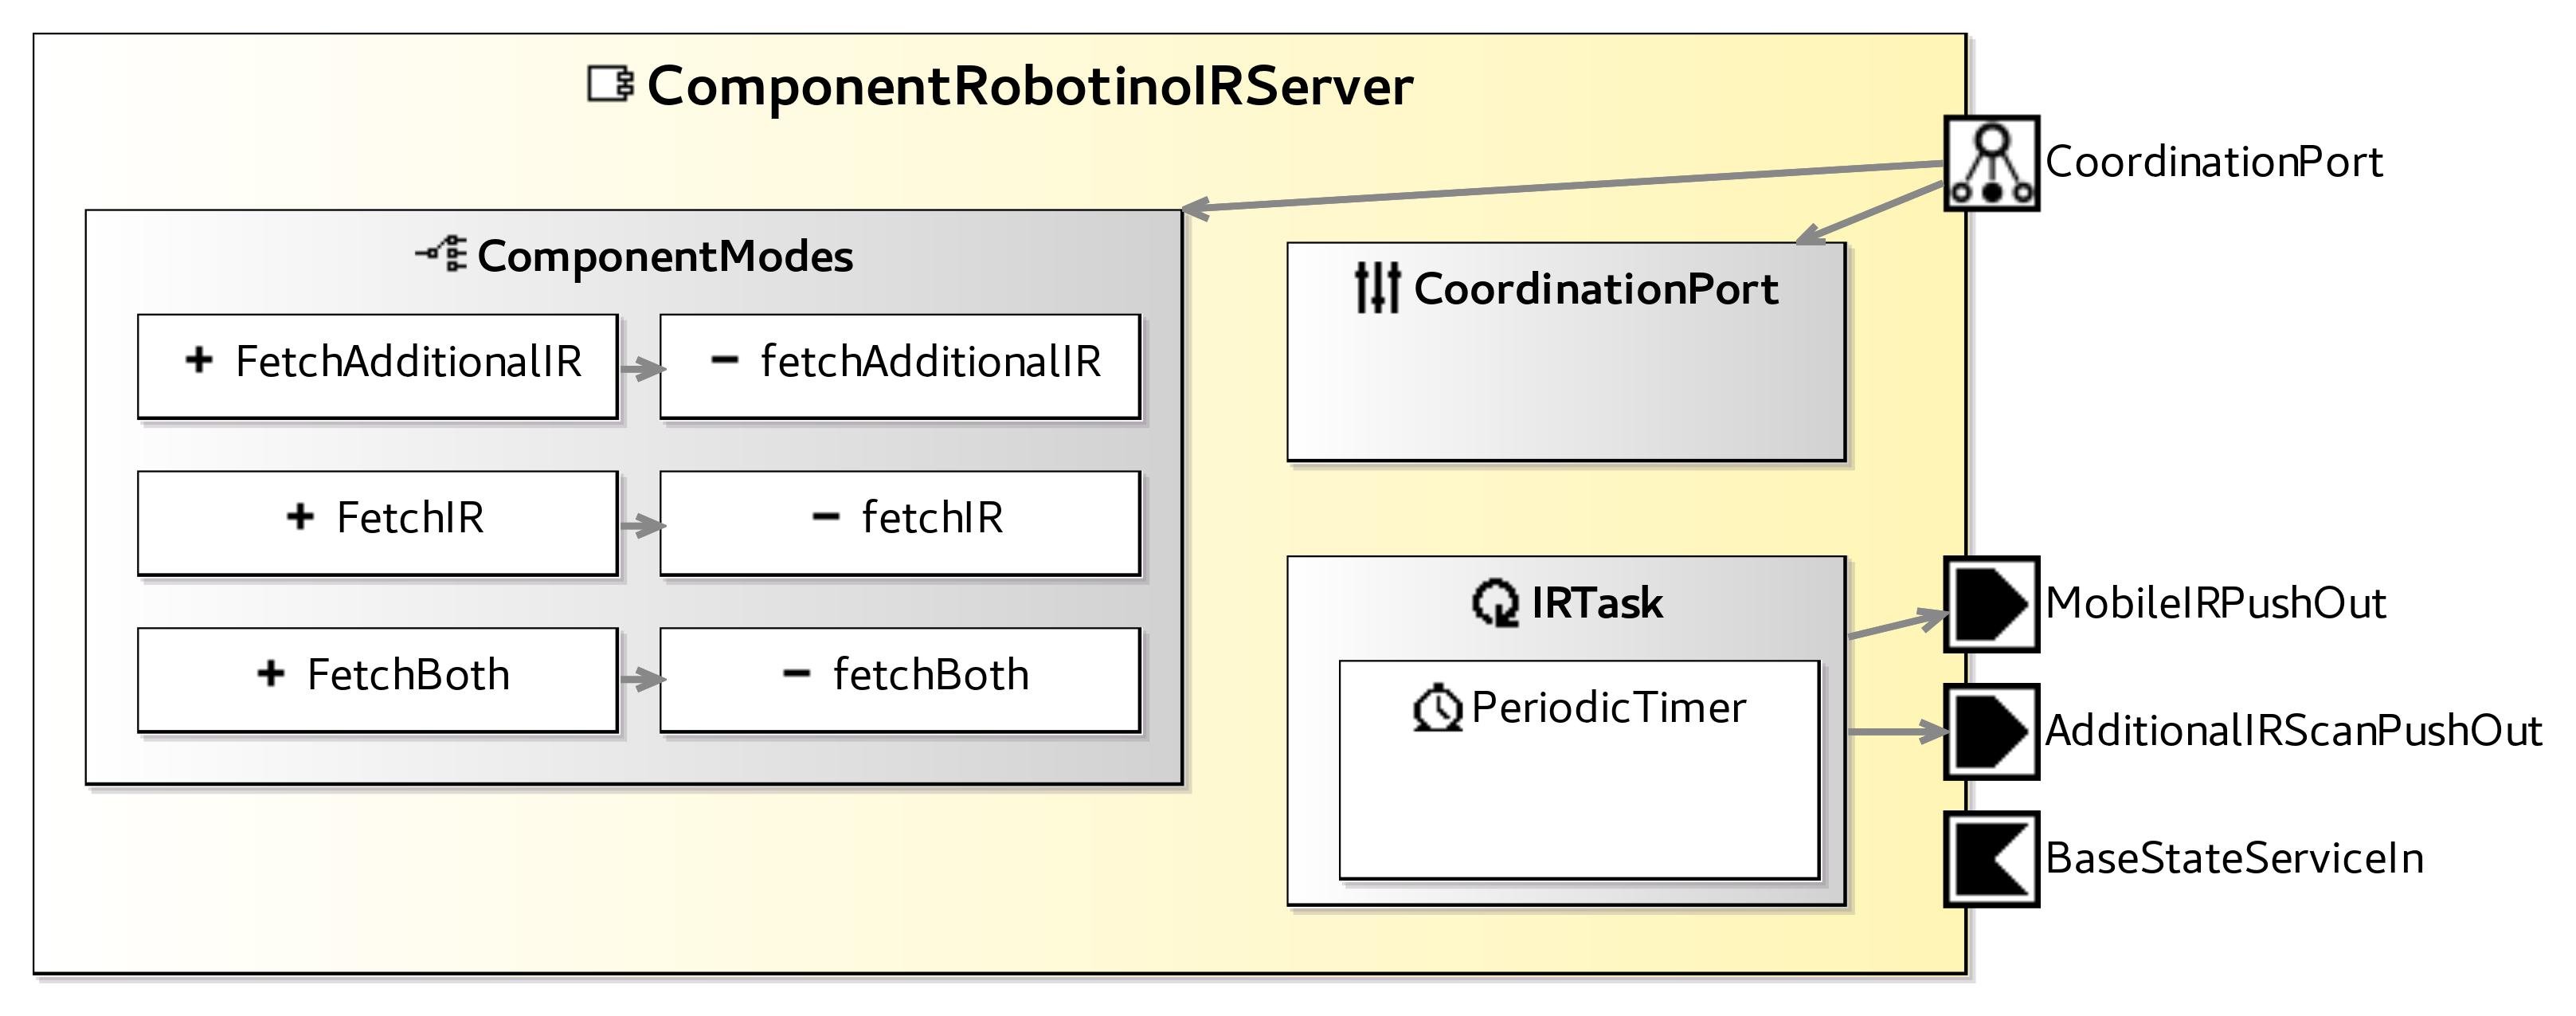 raw.githubusercontent.com_servicerobotics-ulm_componentrepository_master_componentrobotinoirserver_model_componentrobotinoirservercomponentdefinition.jpg